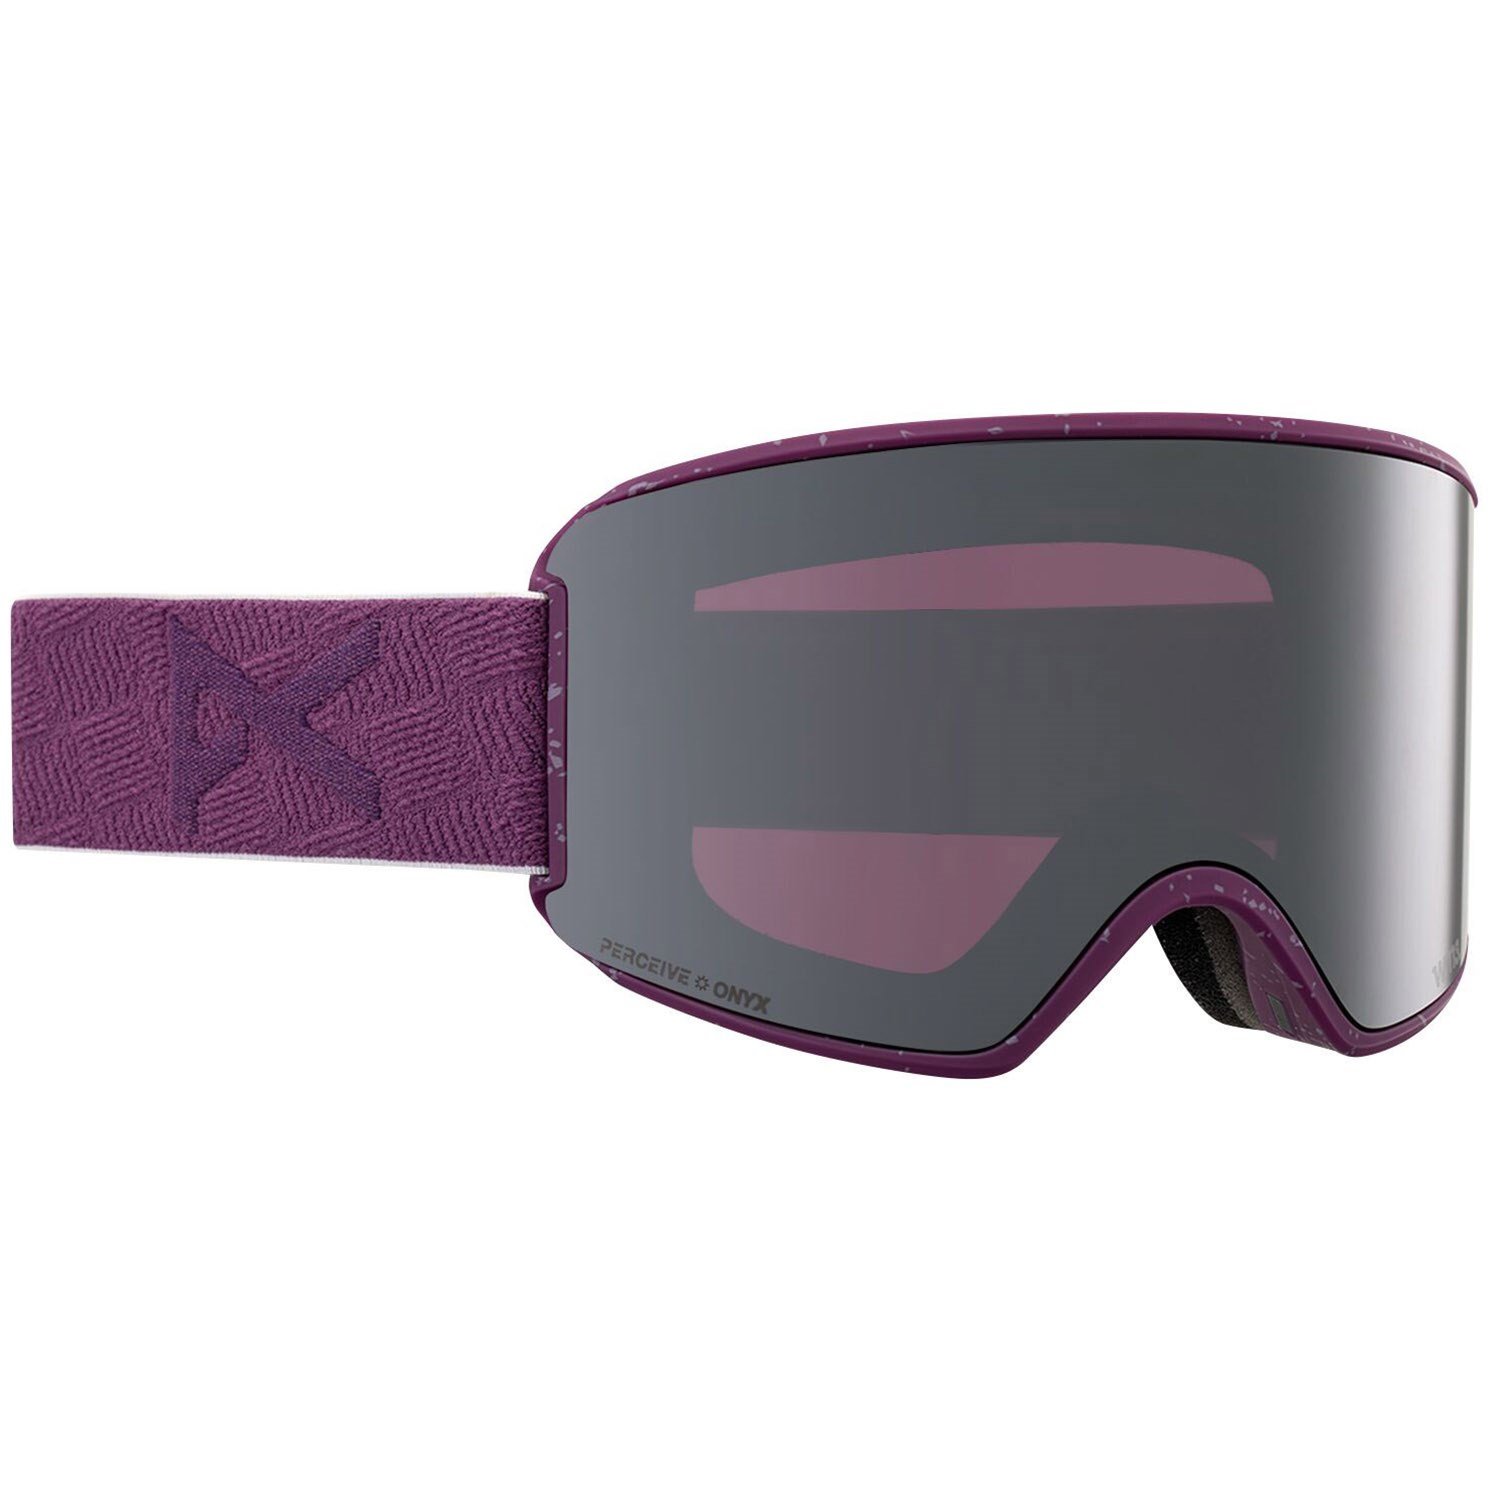 Gator Gear Multi-Lens Sunglasses Kit - Black (w/ Prescription Lens Ins